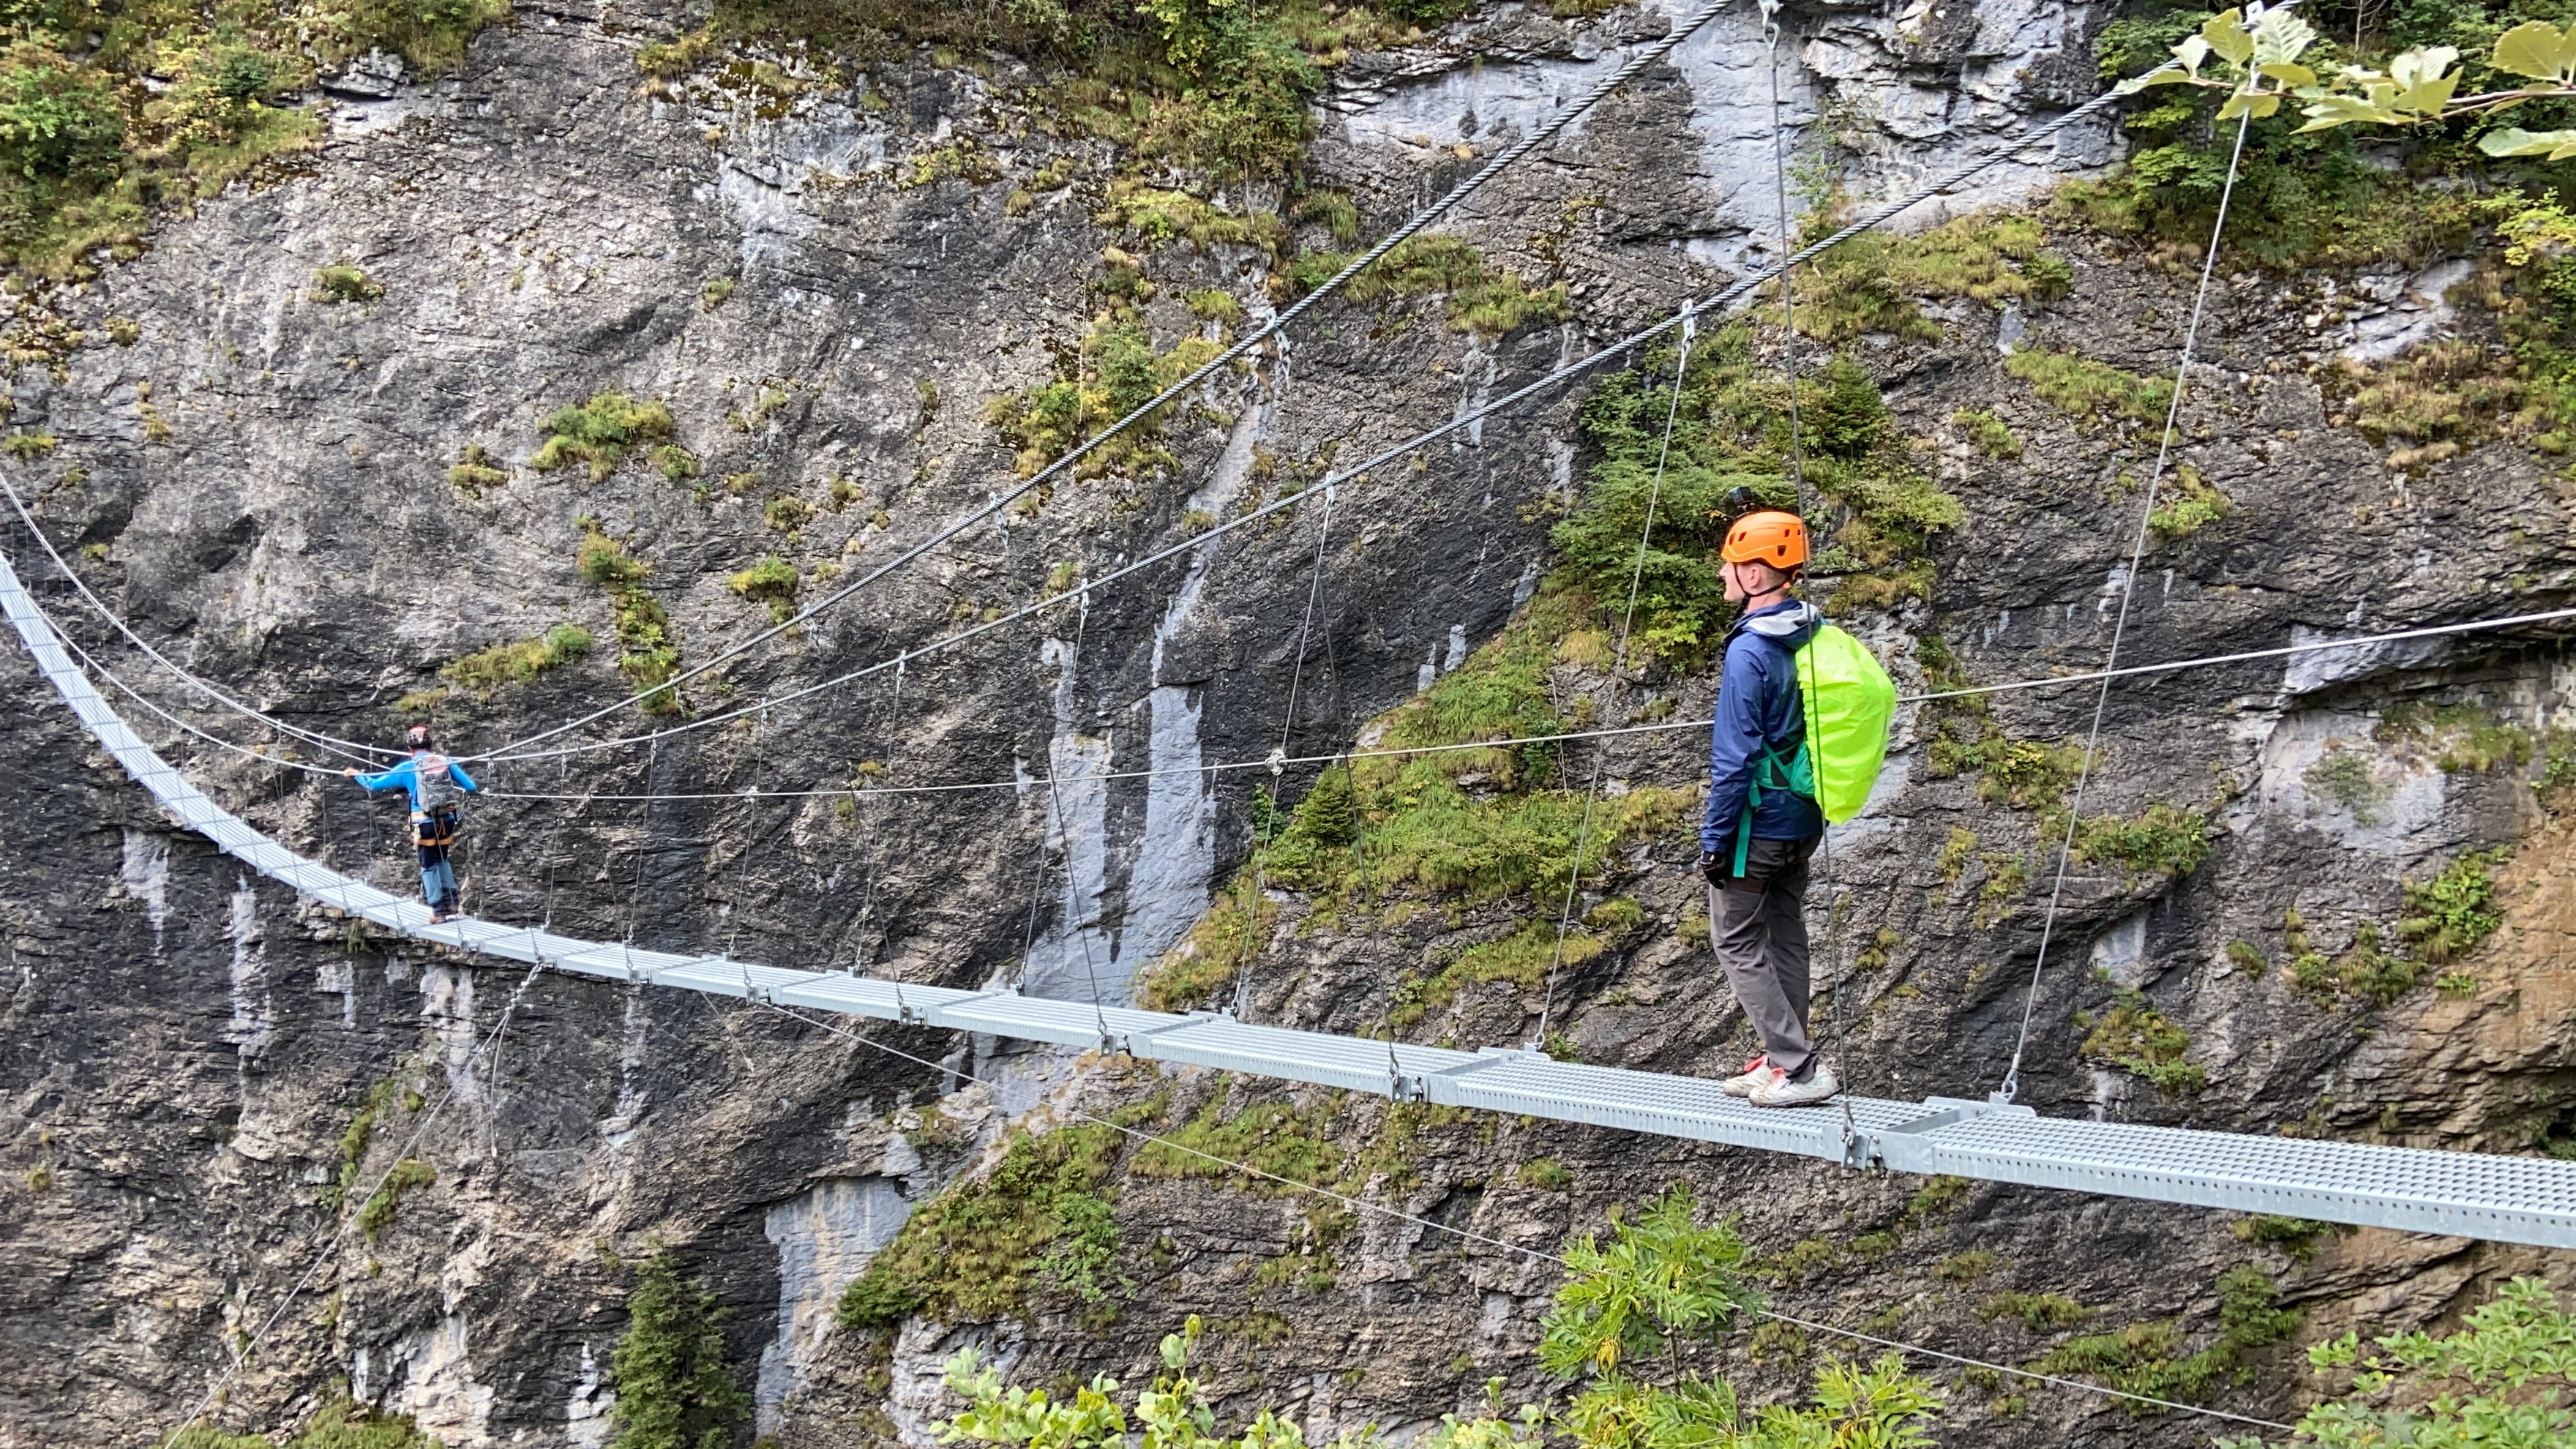 Brett from Aplins in the Alps standing on a via ferrata suspension bridge  between murren switzerland and gimmelwald switzerland